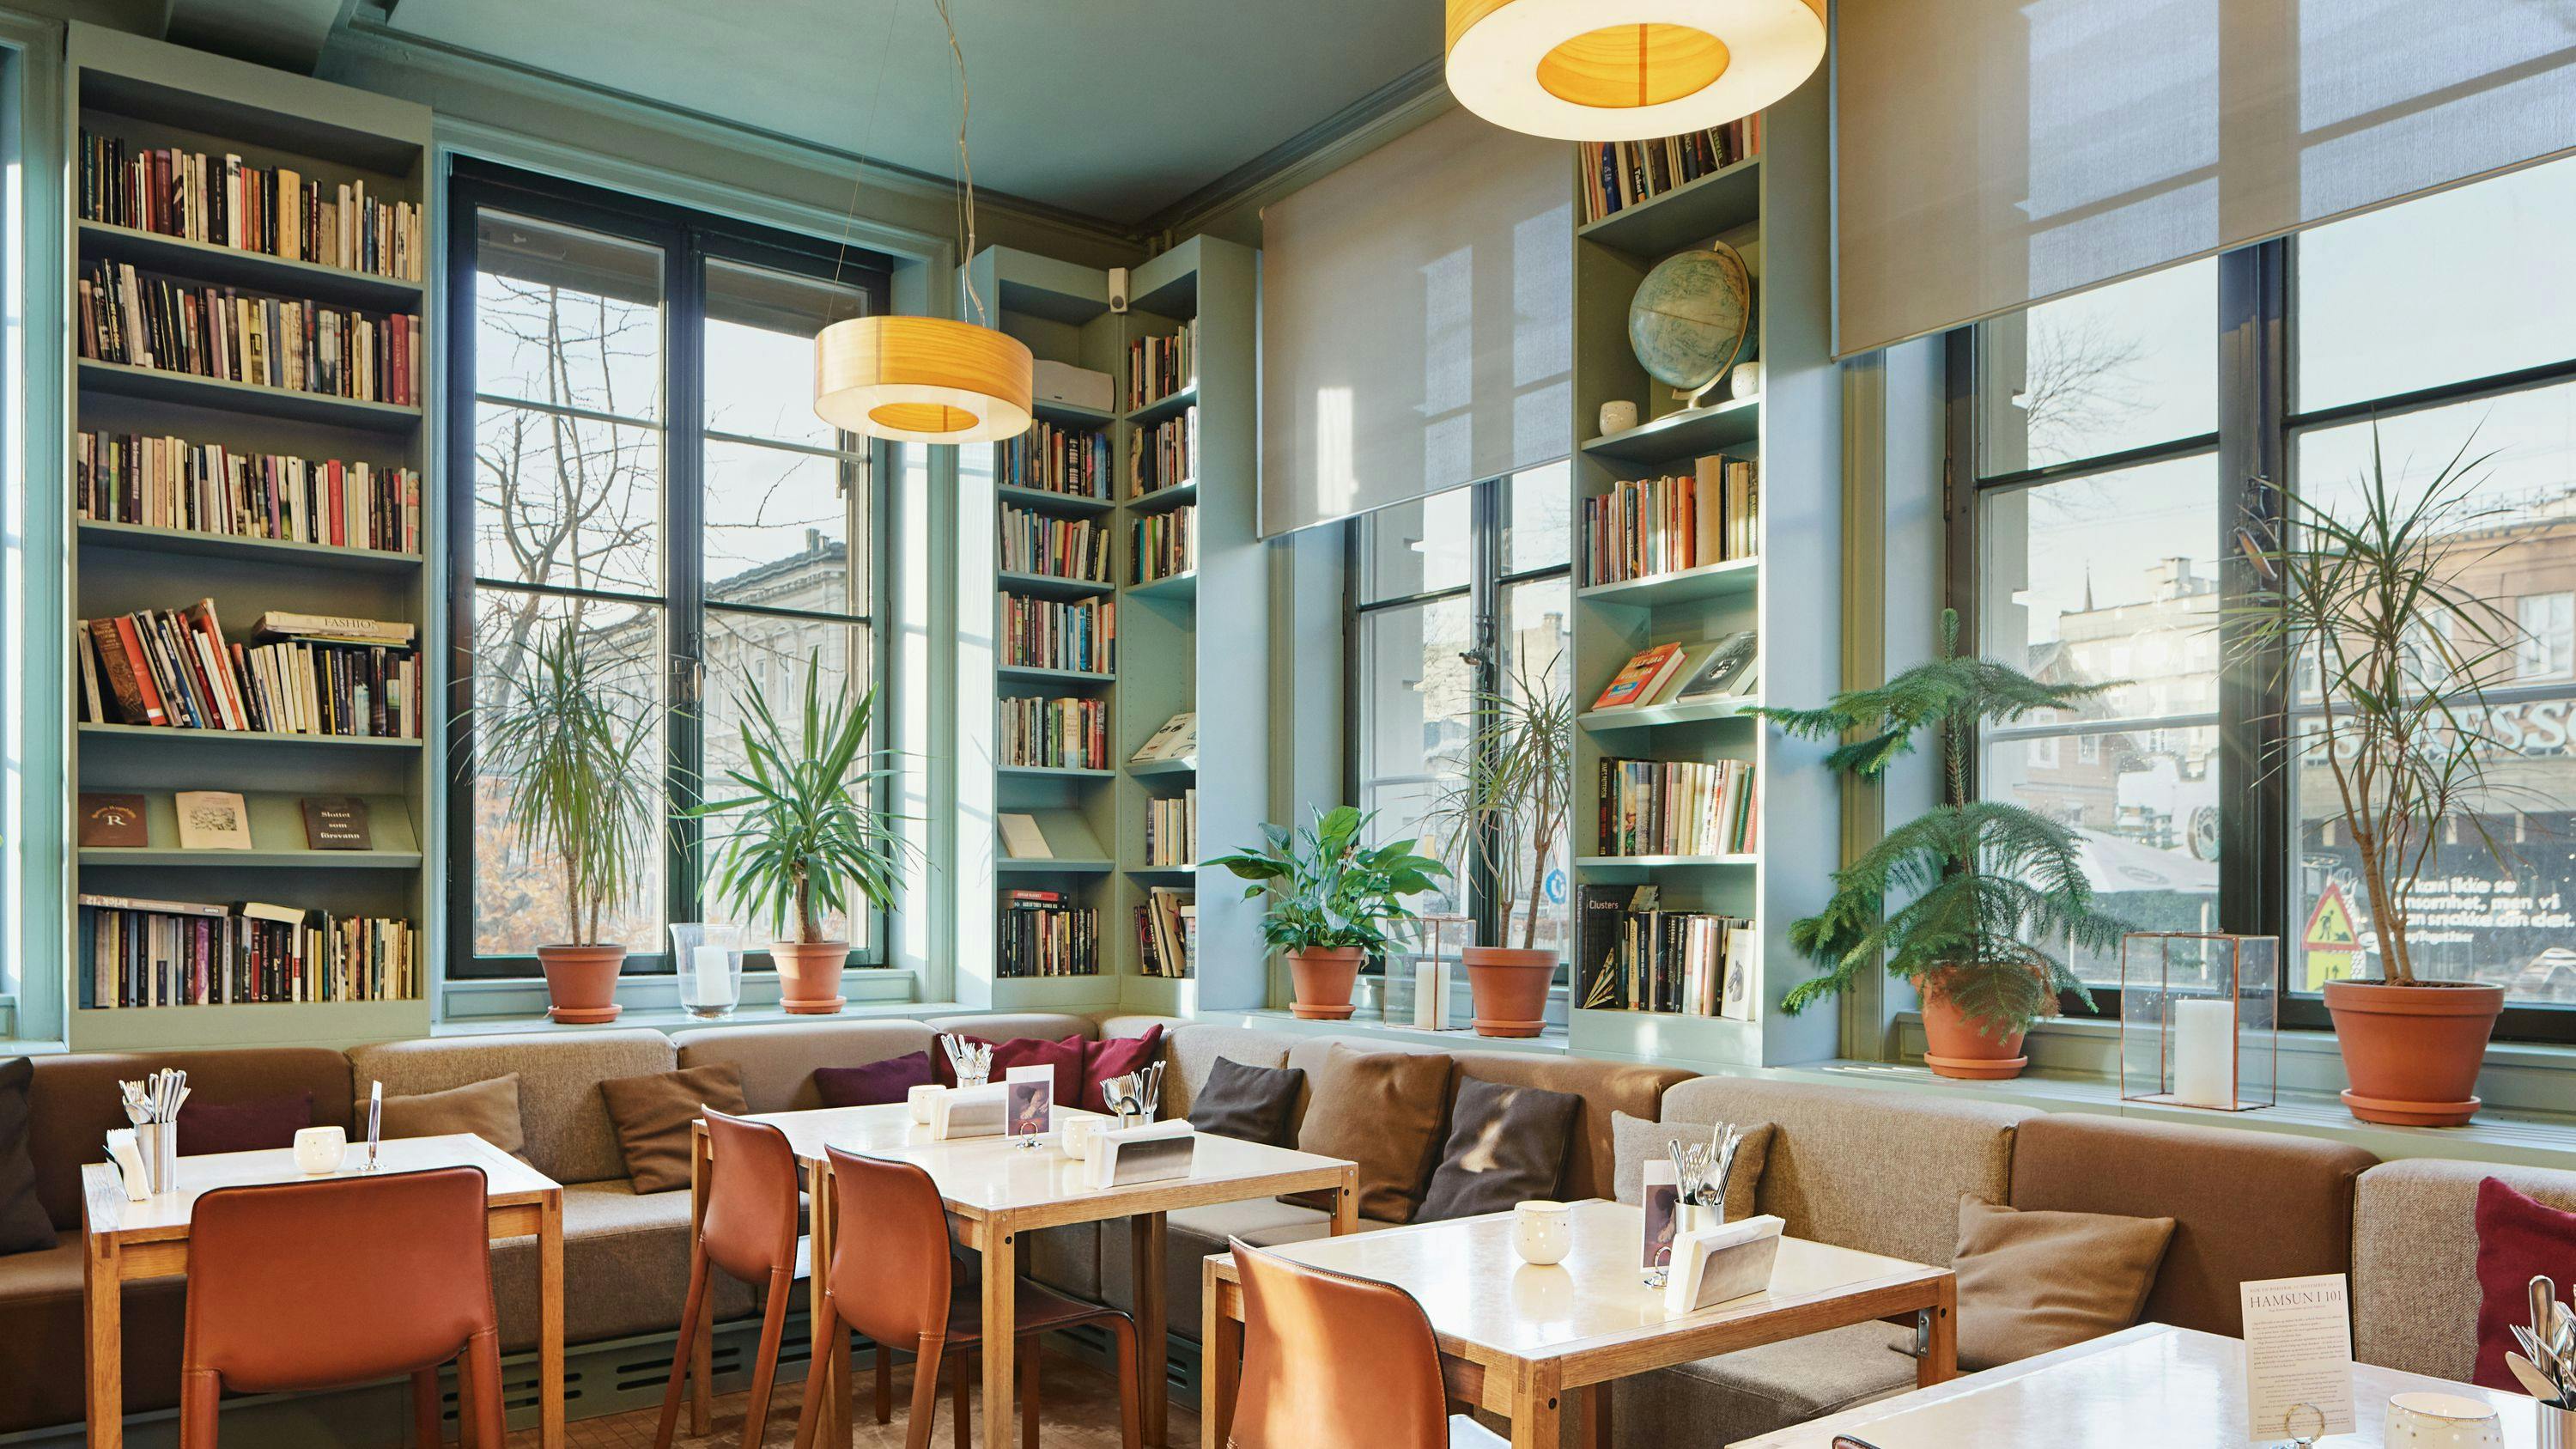 Bilde av spiseareal i Litteraturhusets restaurant Kafe Oslo